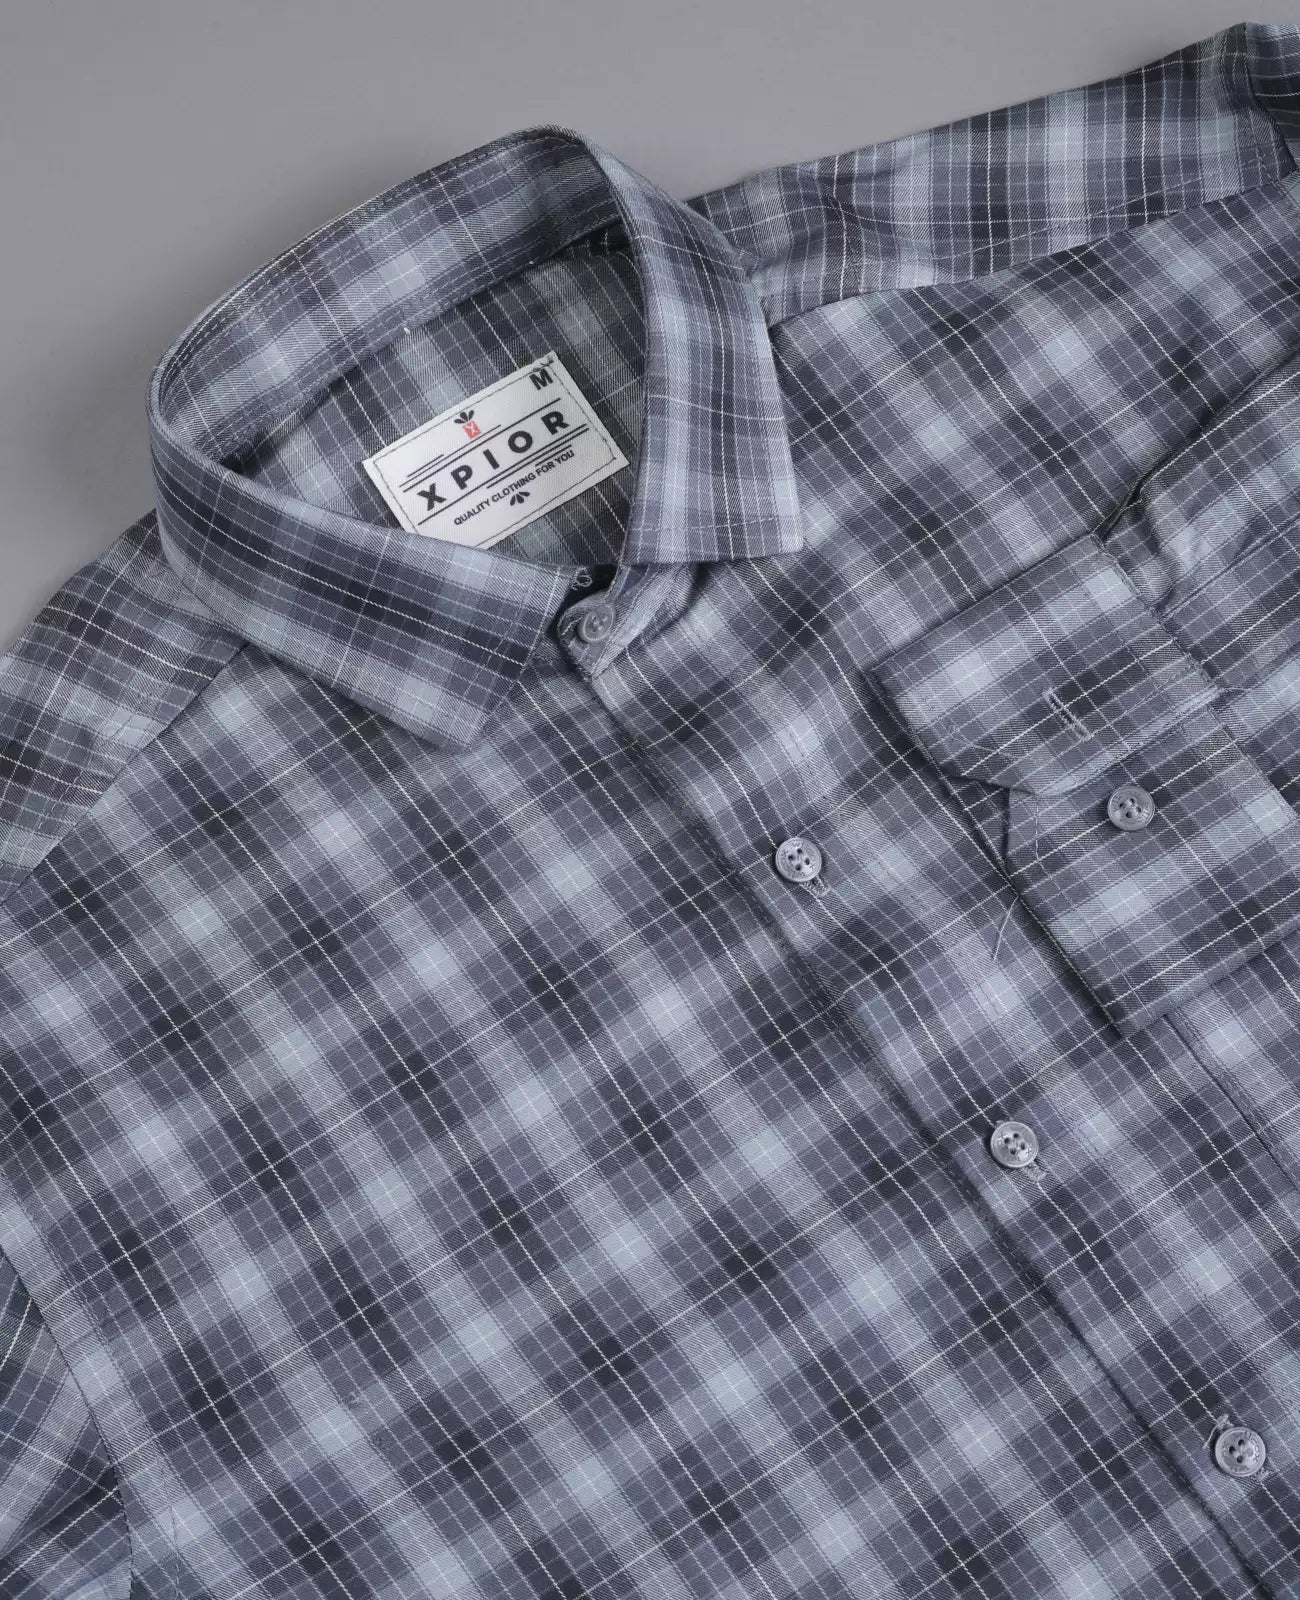 Memorable Men's Full Sleeves Checks Shirt Premium Collection Cotton Fabric Multicolor